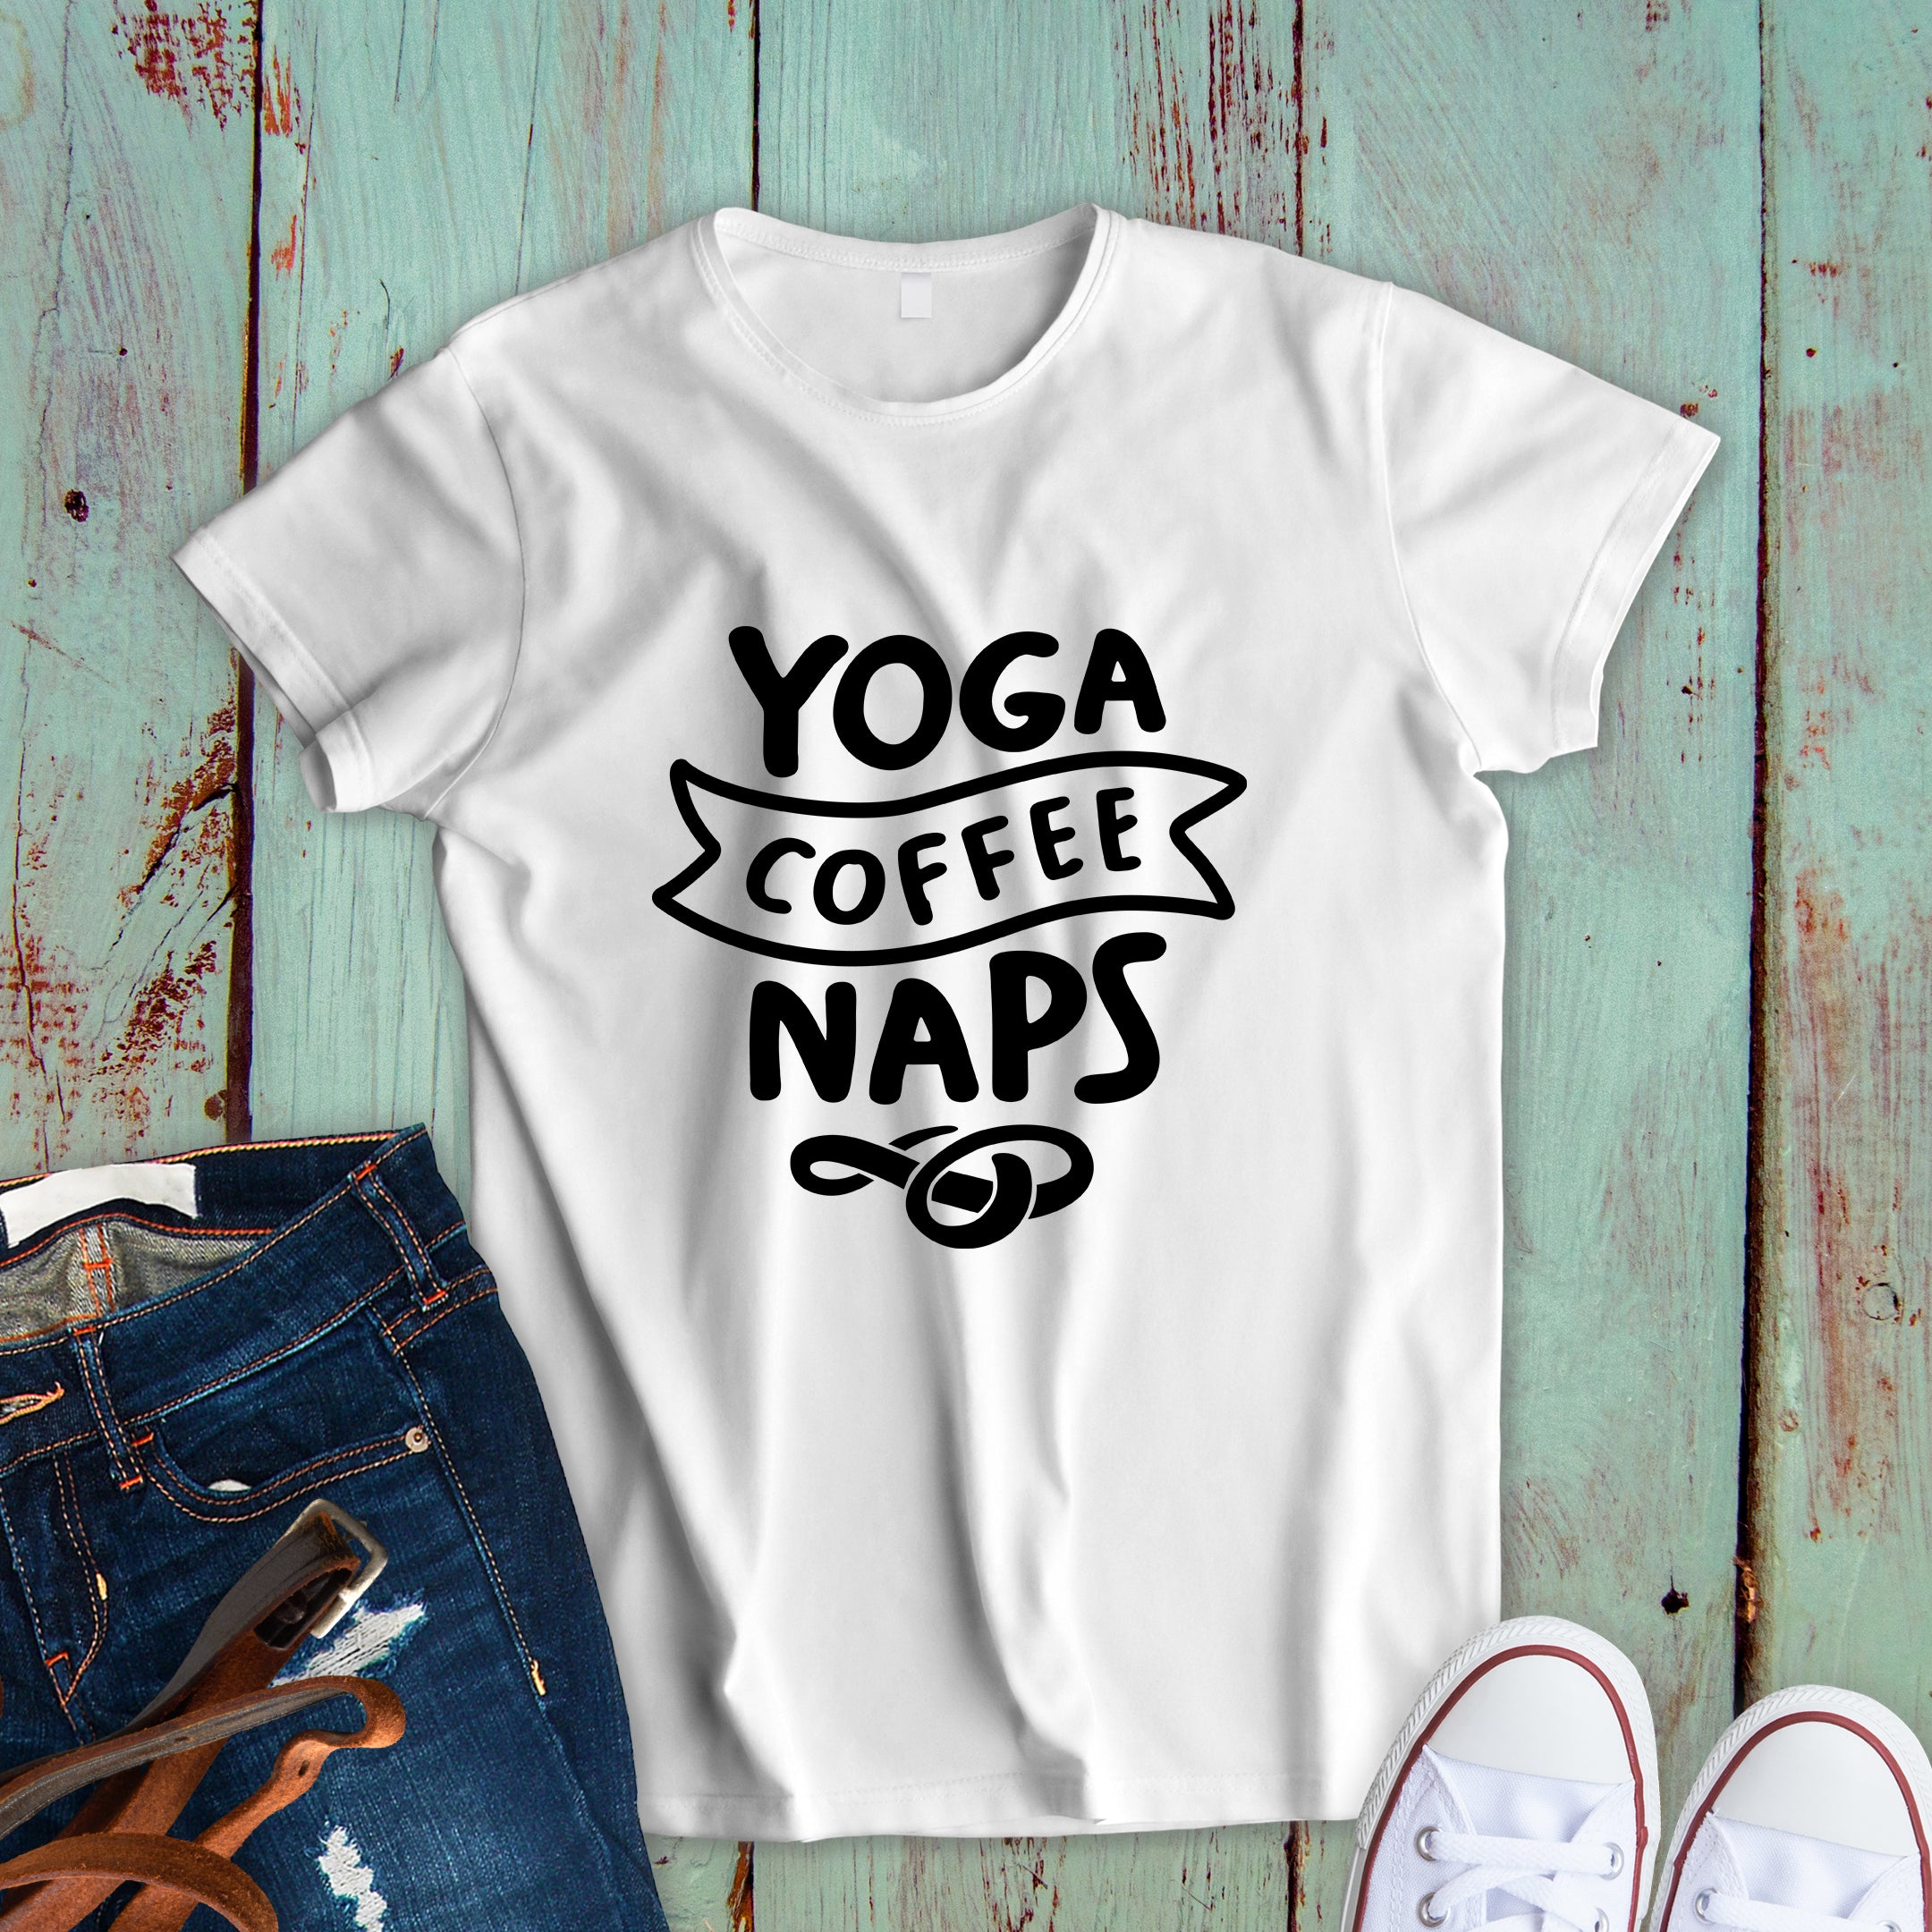 Yoga. Coffee. Naps.